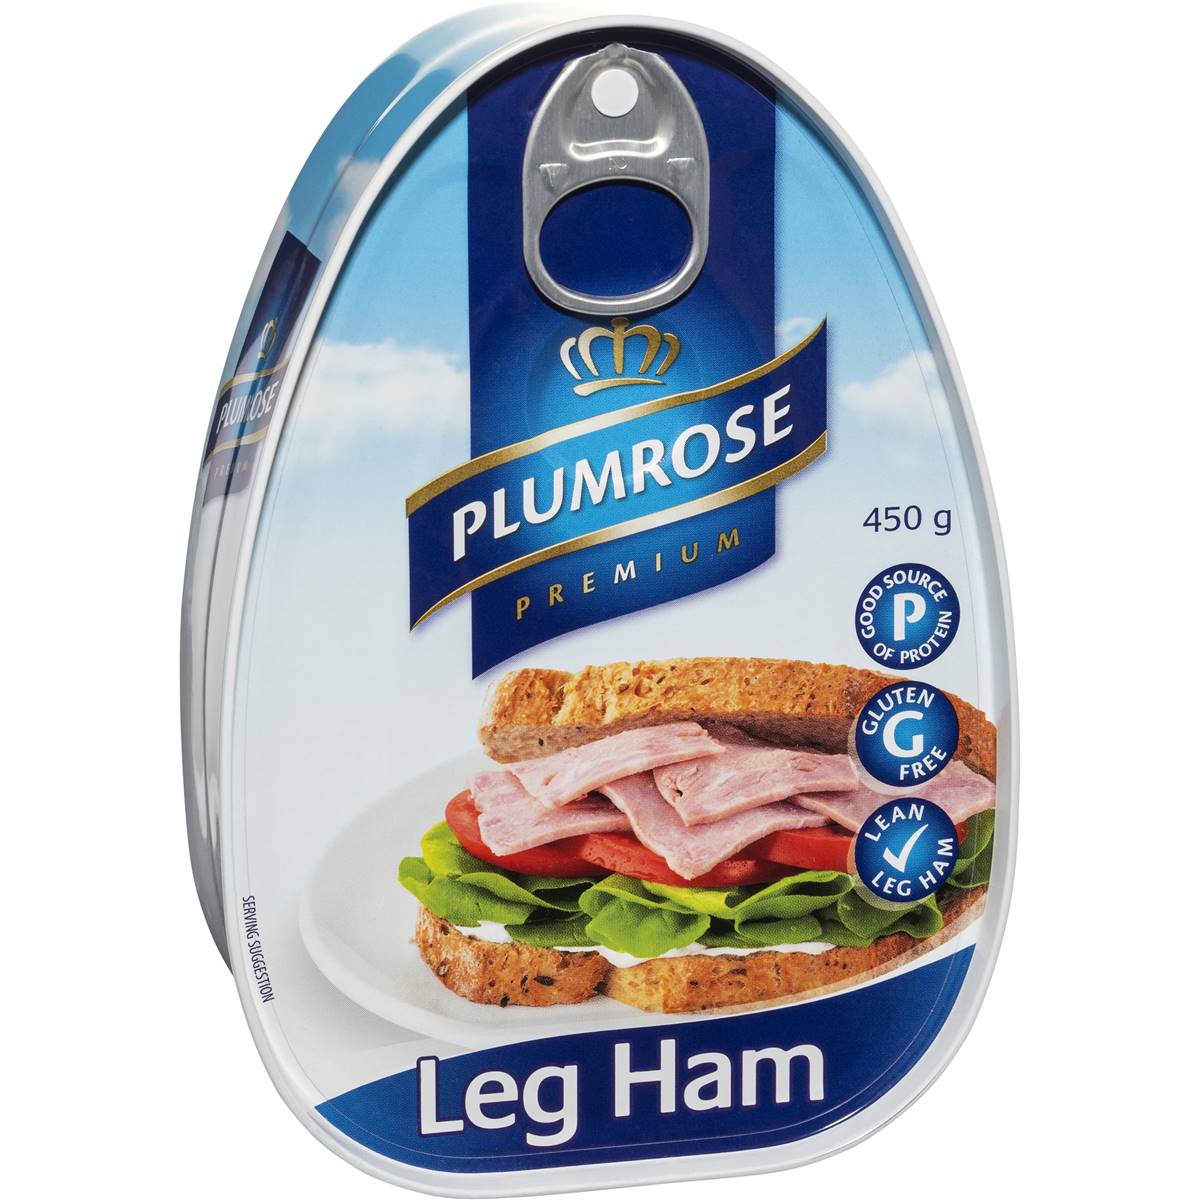 Plumrose Leg Ham 450g